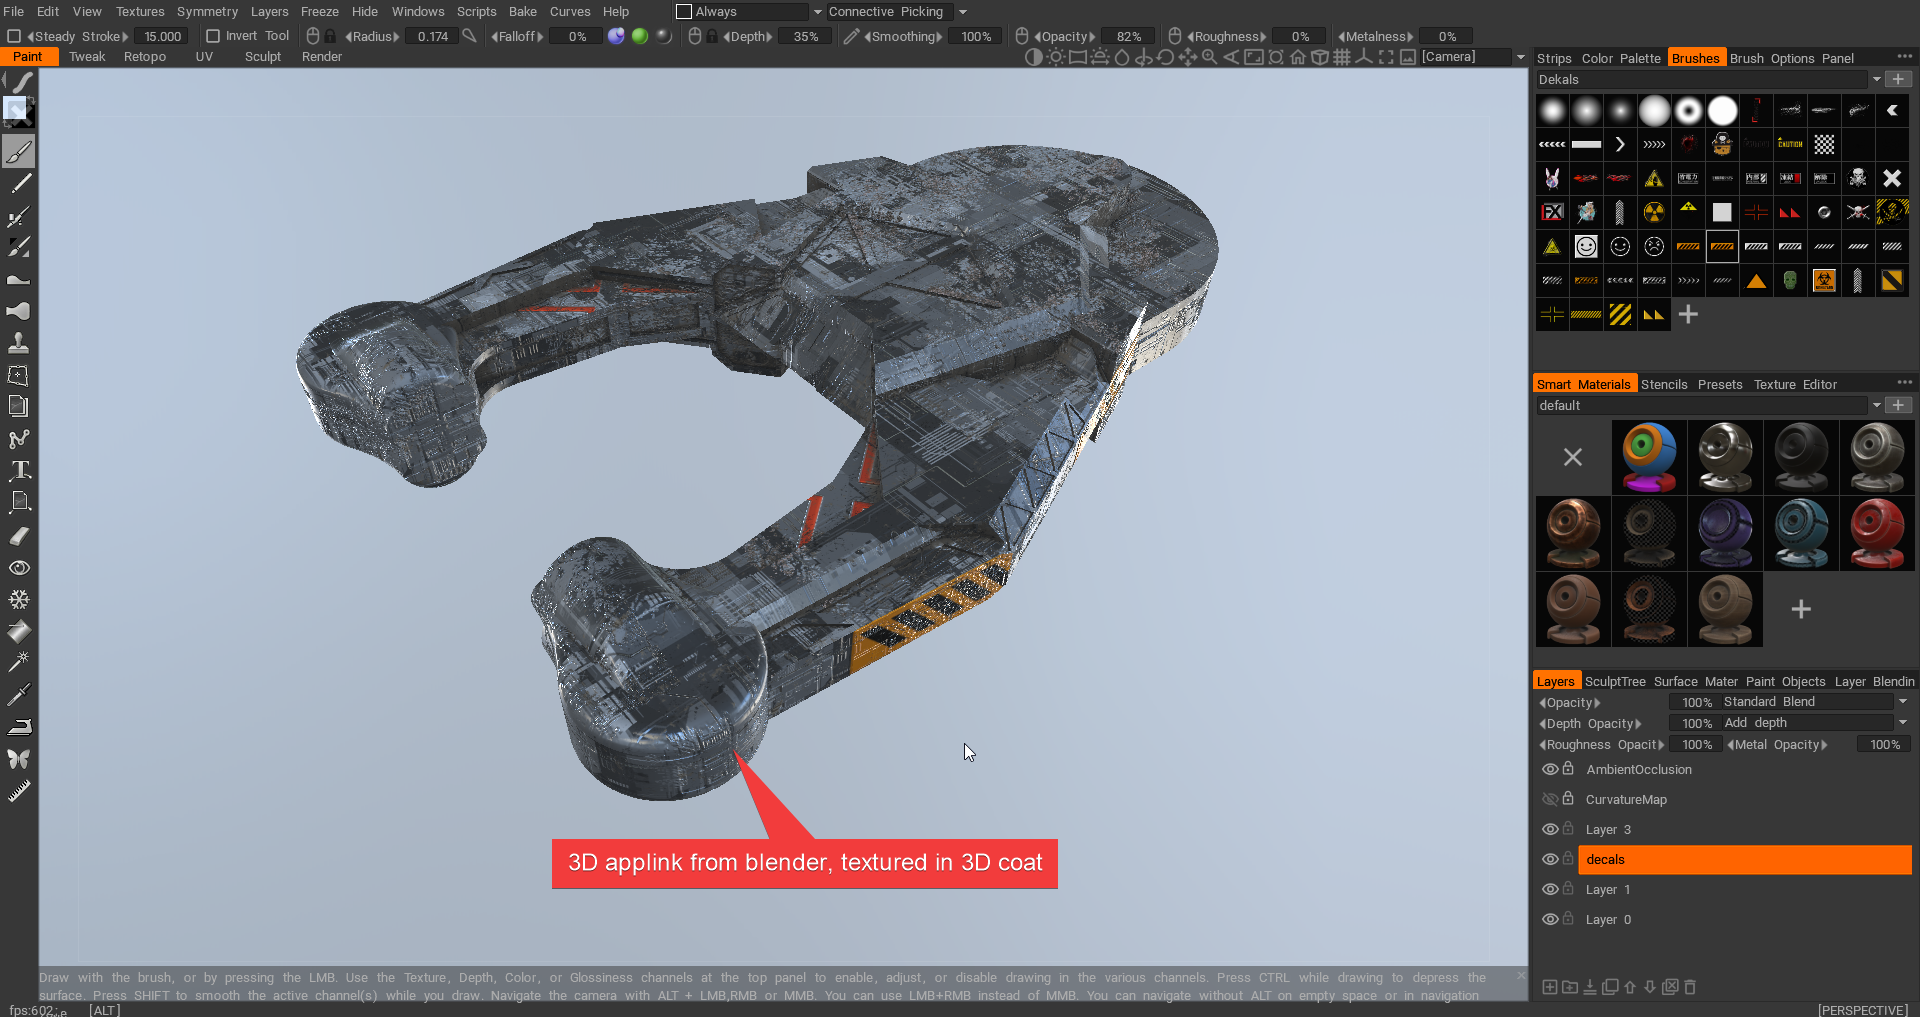 Serrated ideology fair 3D model community • 3D modeling forum • 3D printing forum - 3D Coat